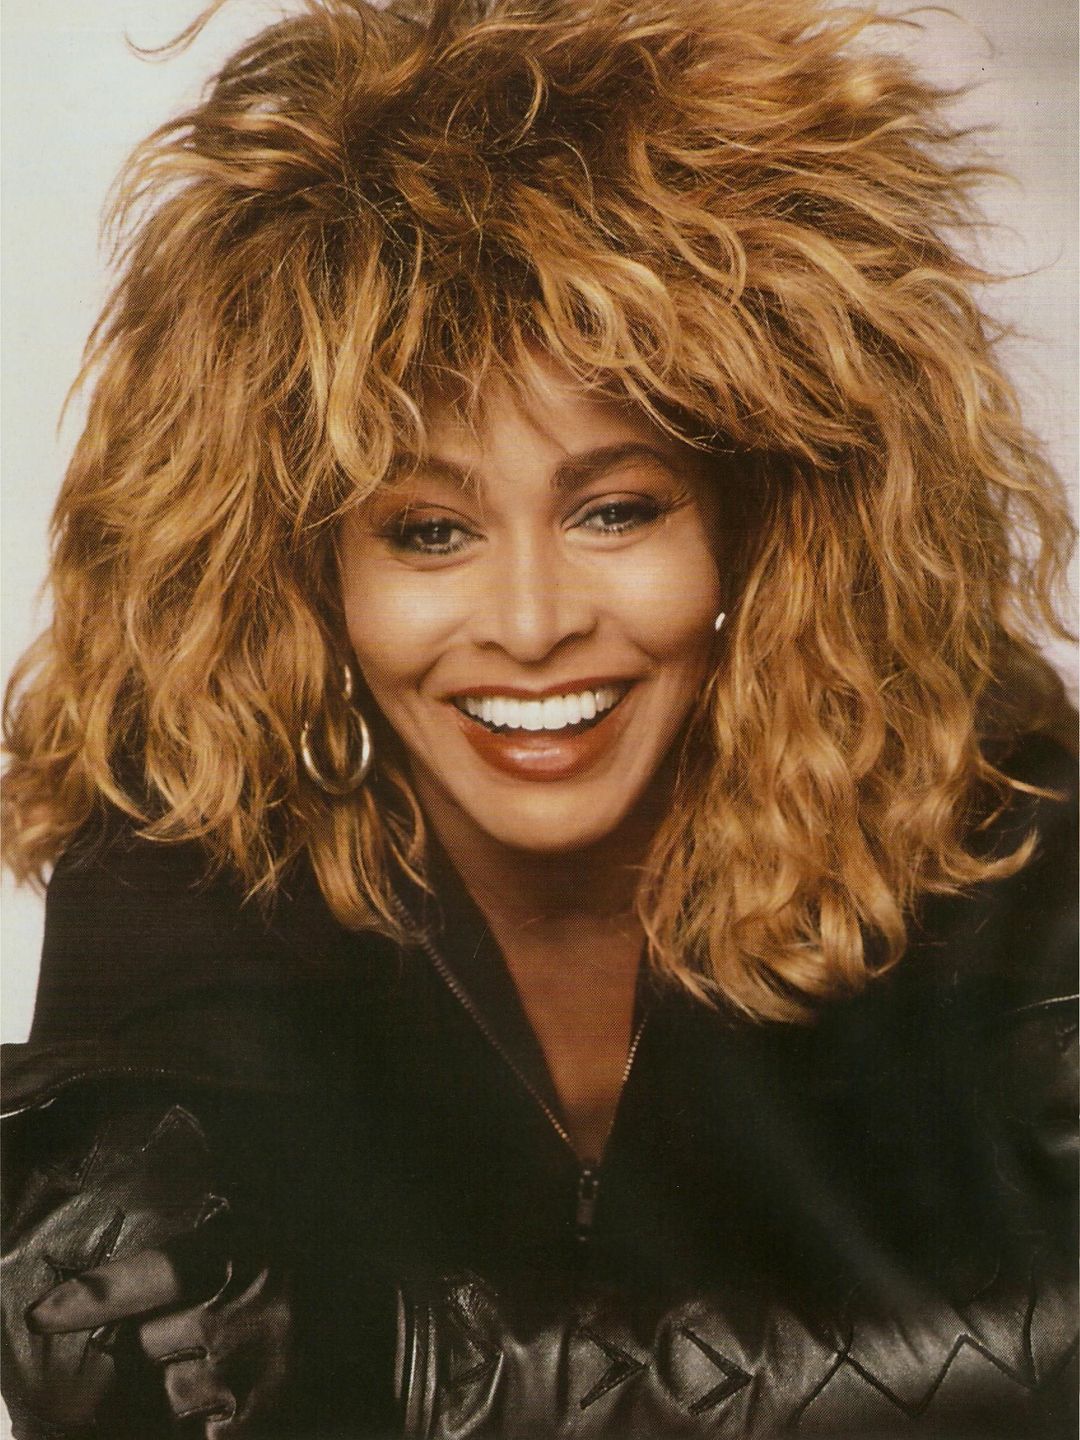 Tina Turner cause of death